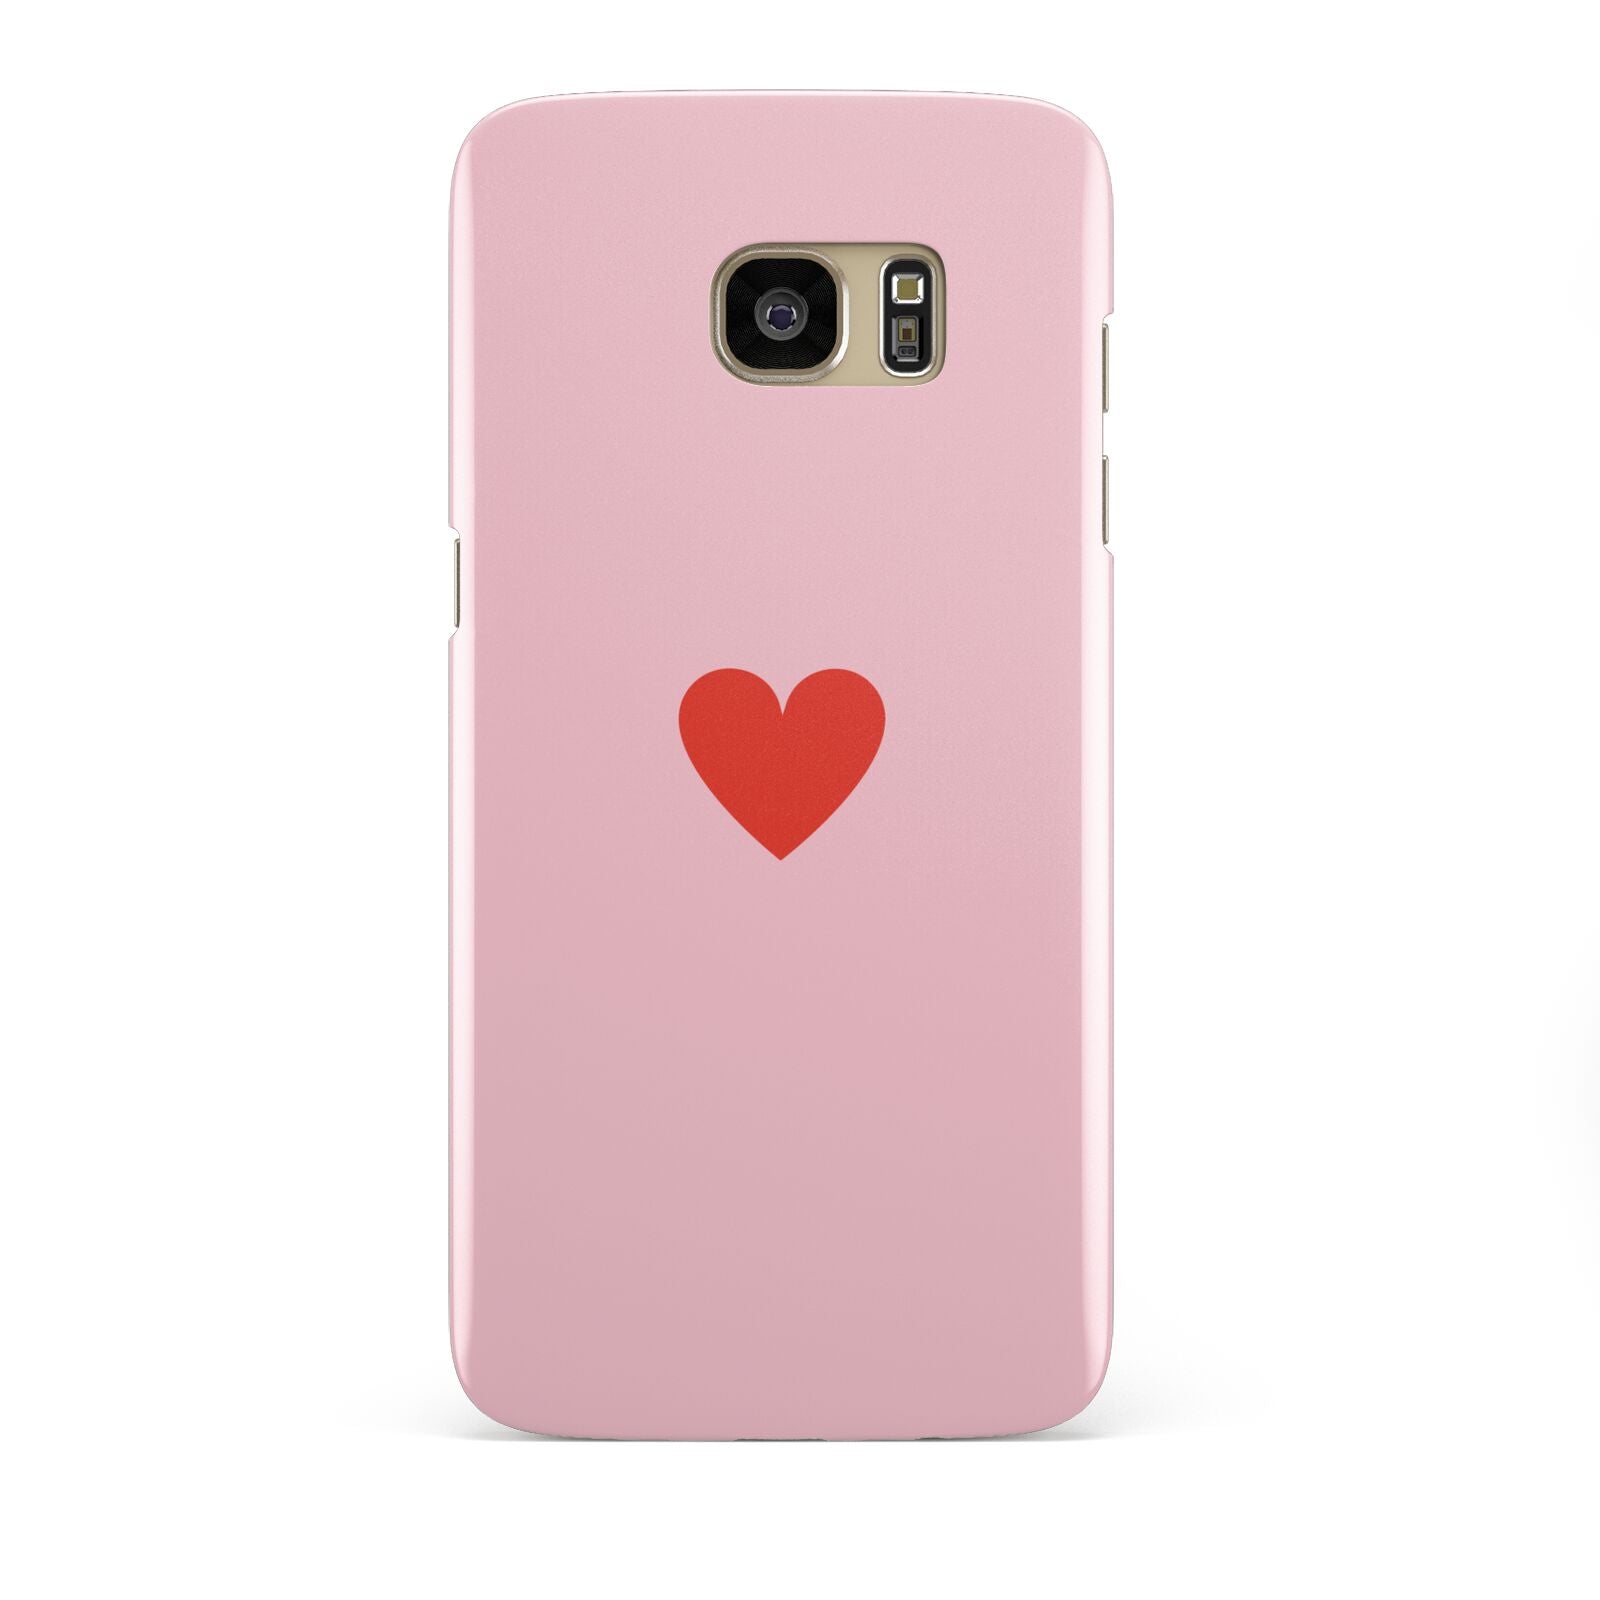 Red Heart Samsung Galaxy S7 Edge Case